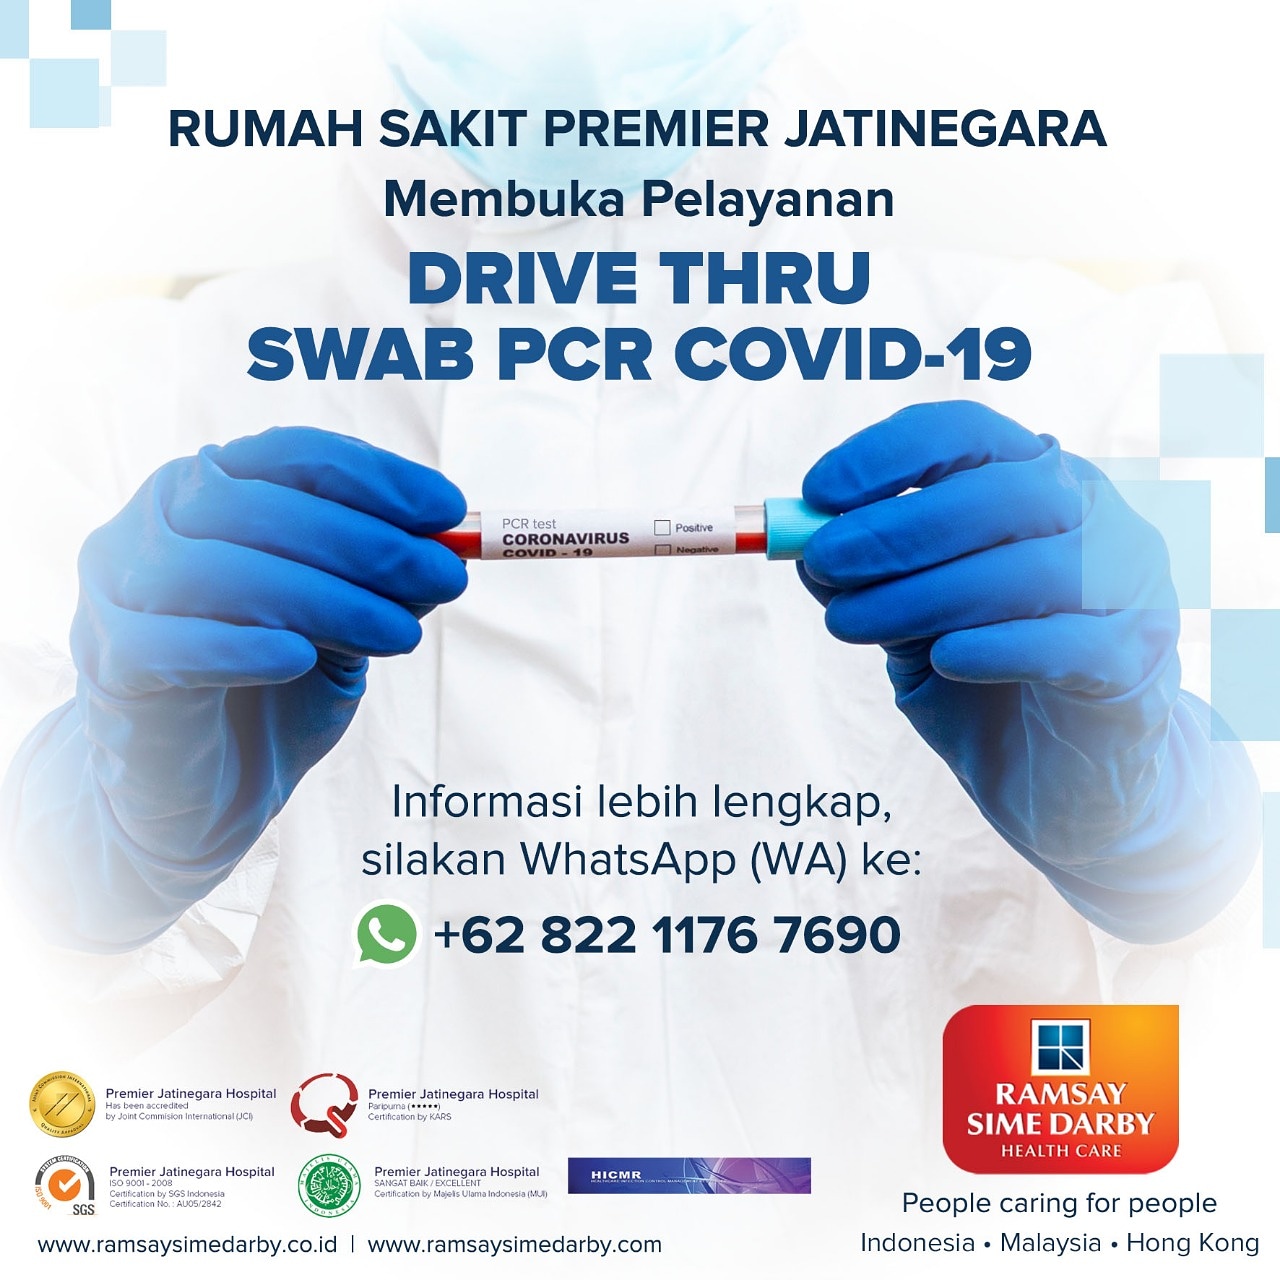 Drive Thru Swab PCR Covid-19 di RS Premier Jatinegara